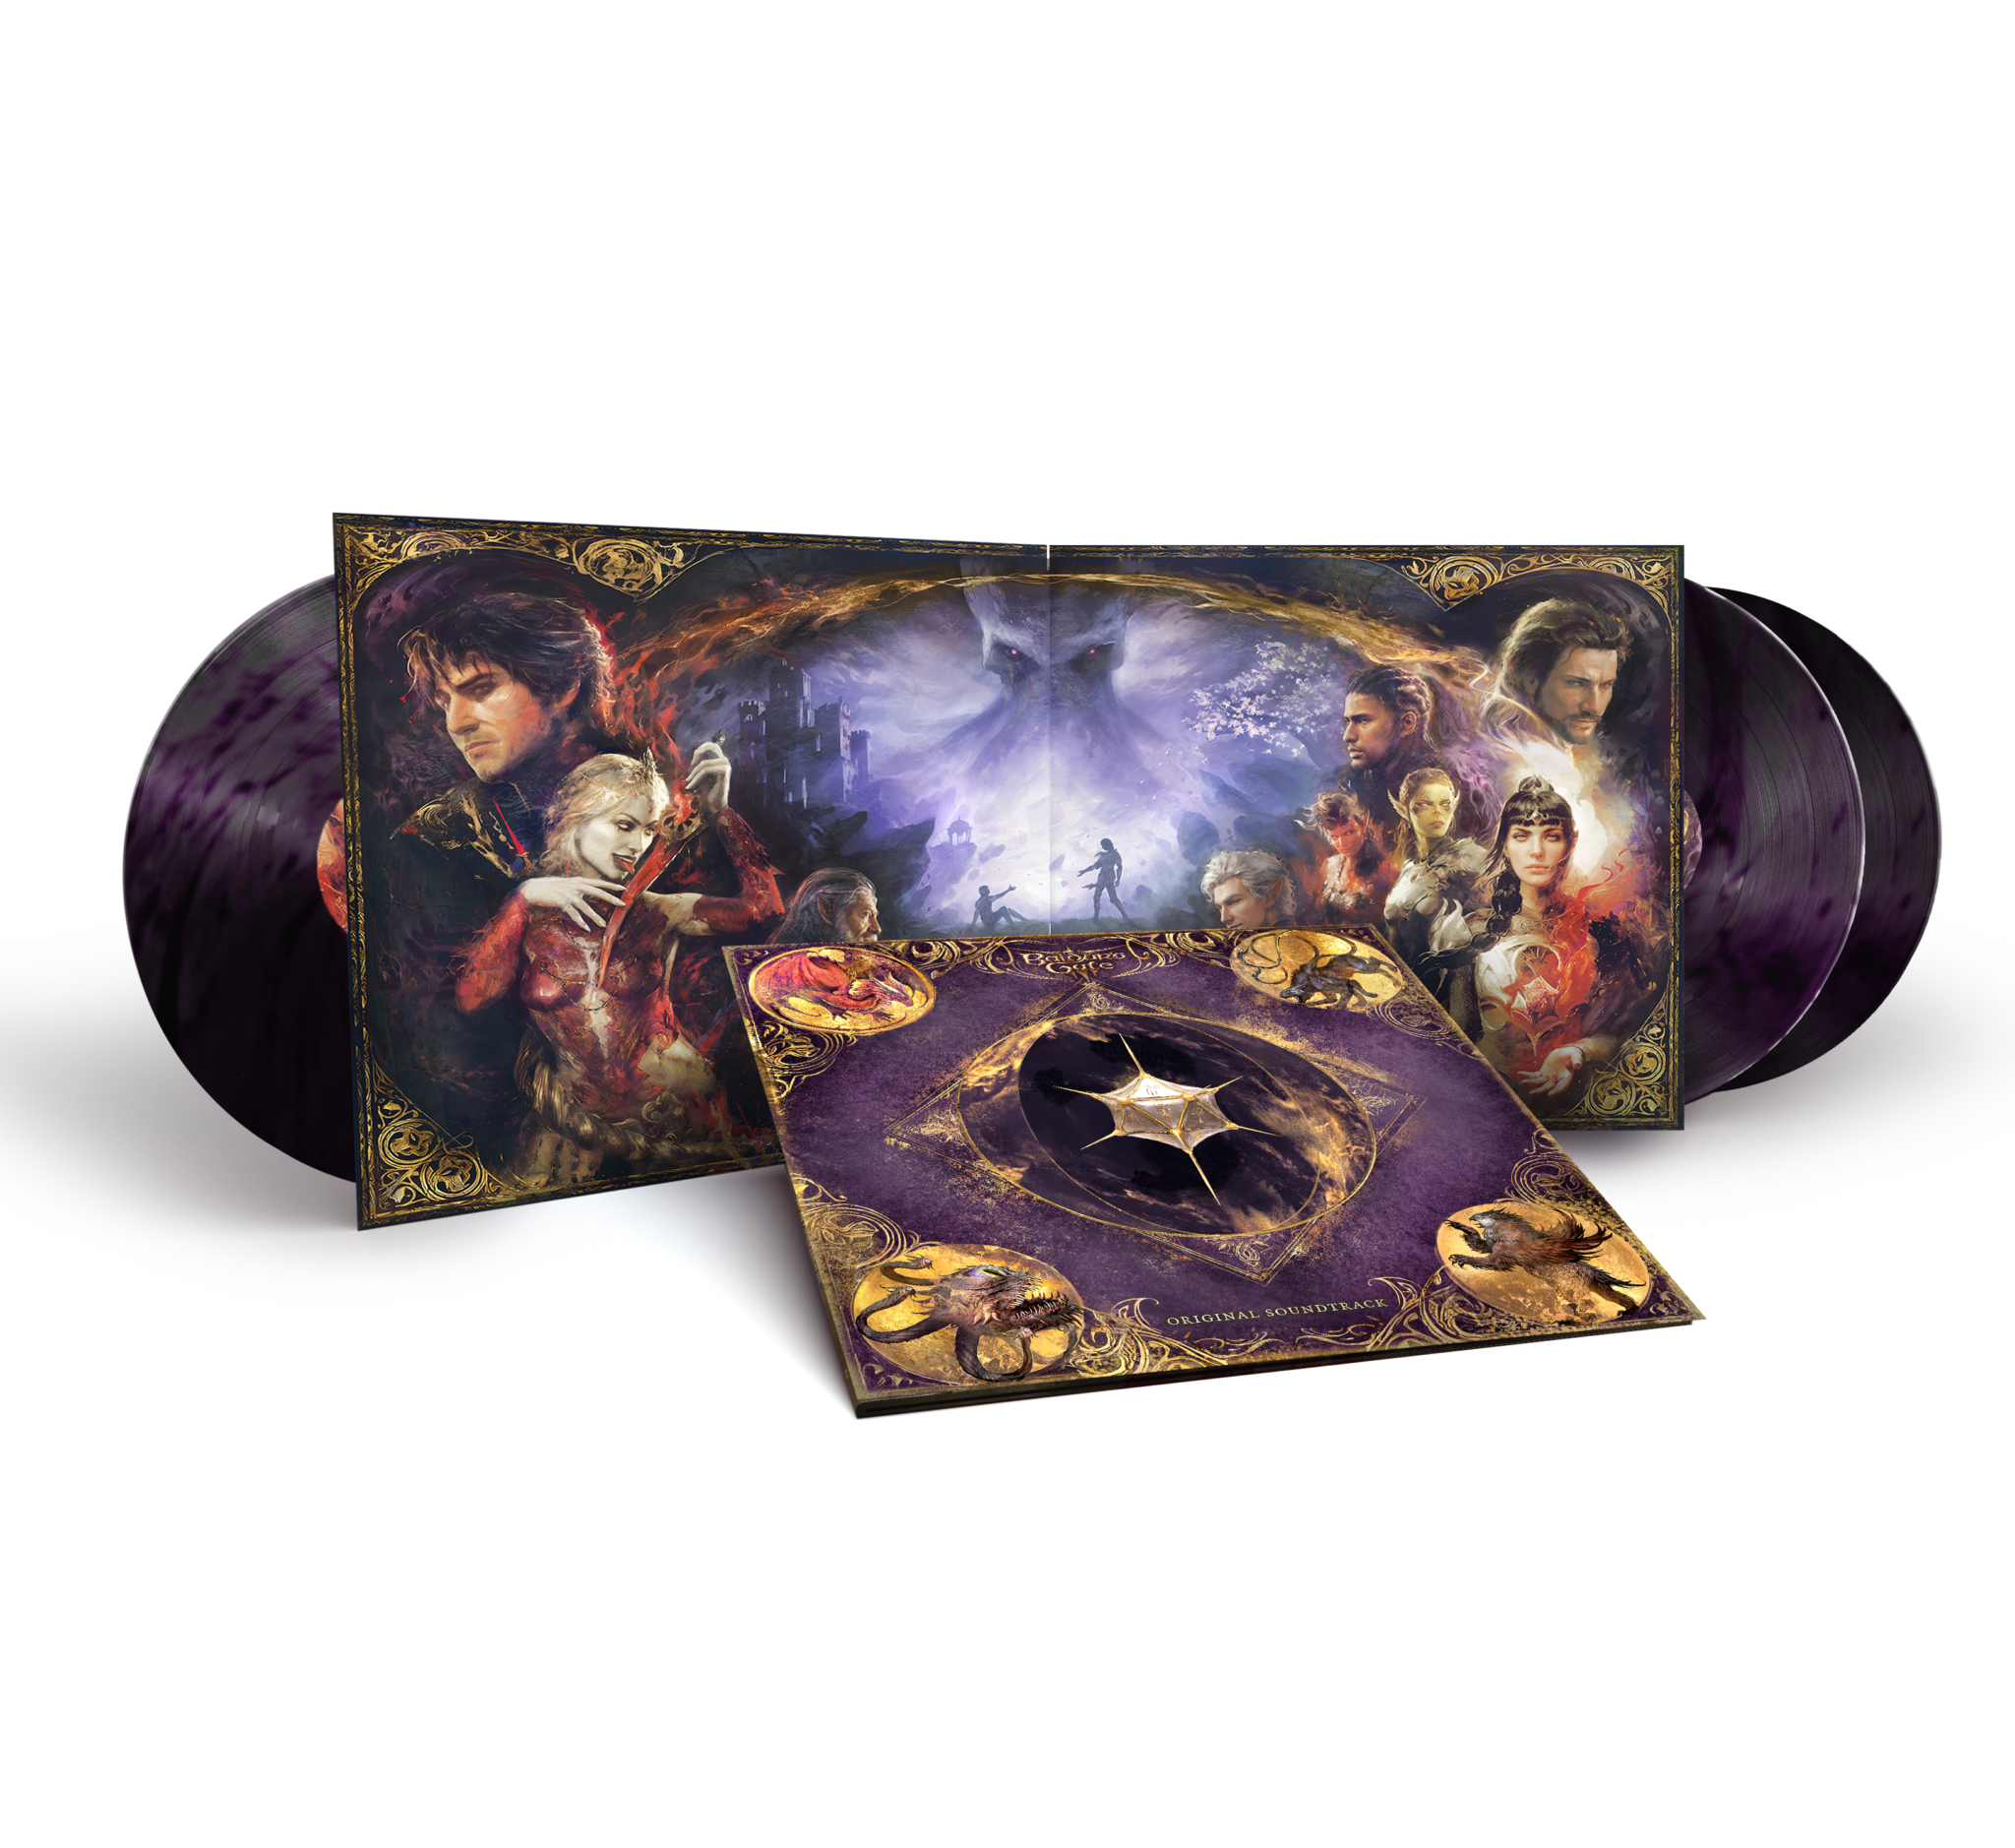 Baldur's Gate 3 Soundtrack Vinyl standard